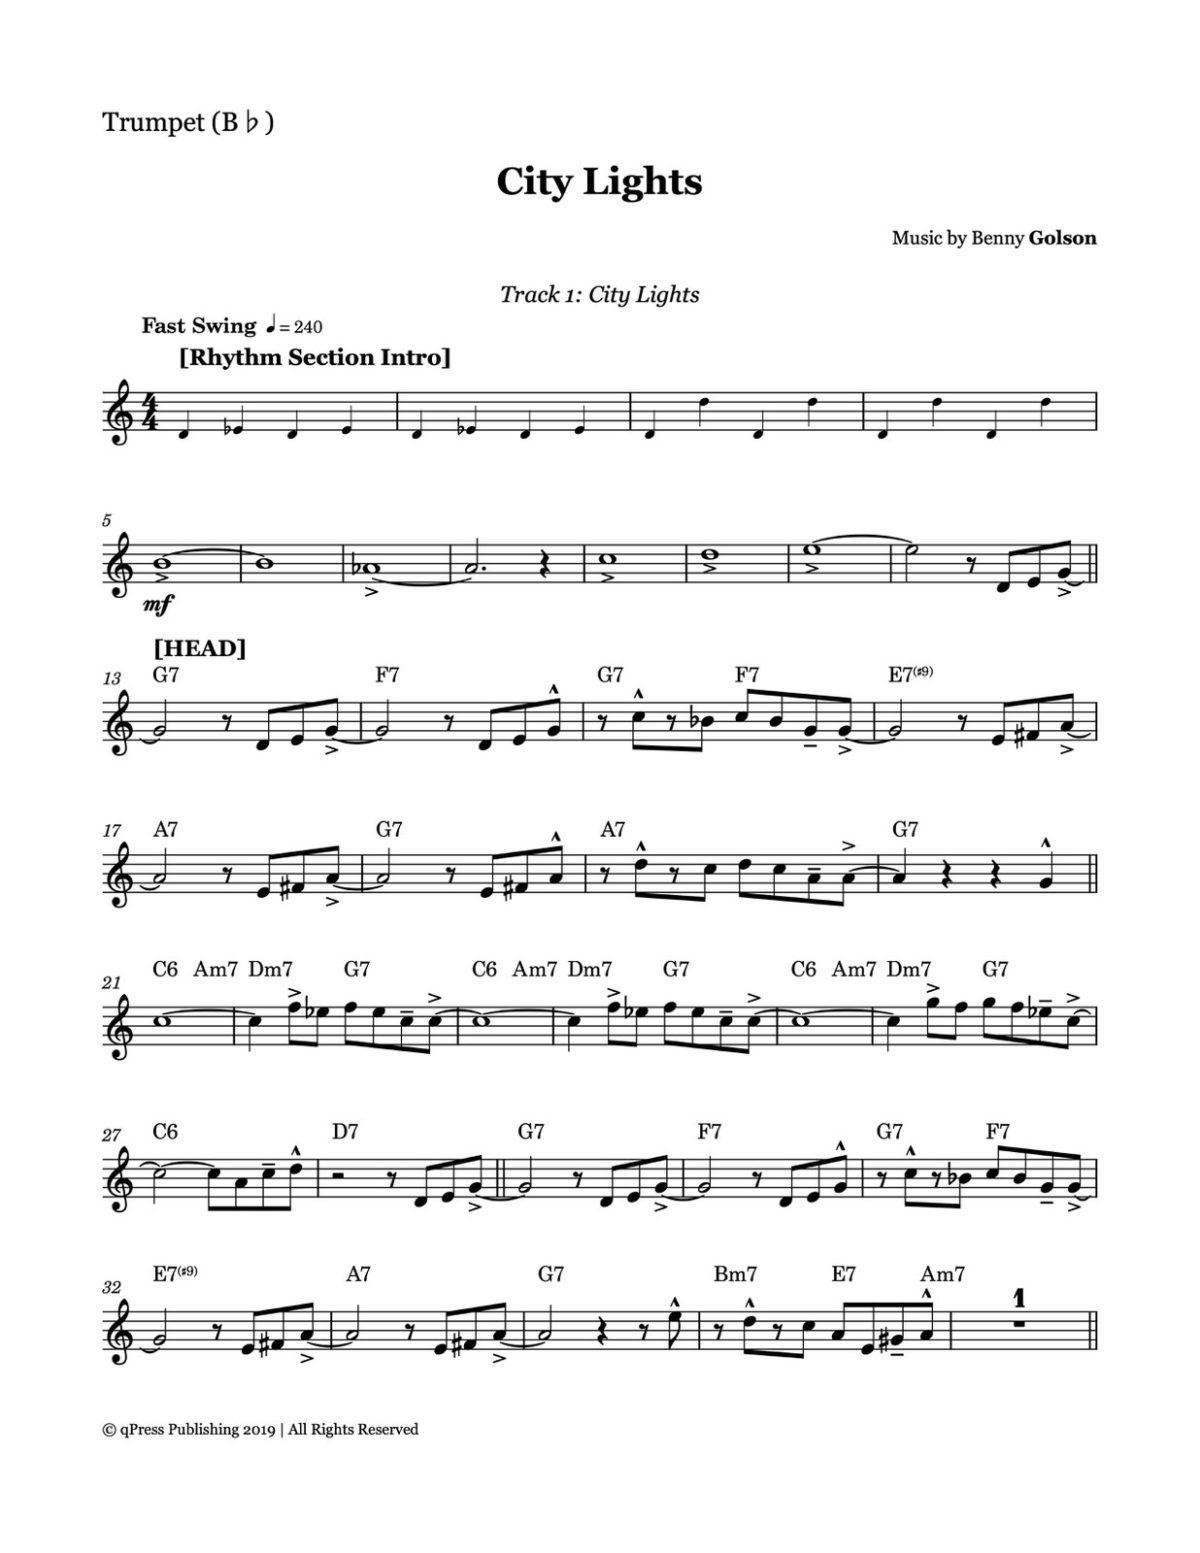 City Lights (Complete Album Transcription) by Morgan, Lee - qPress